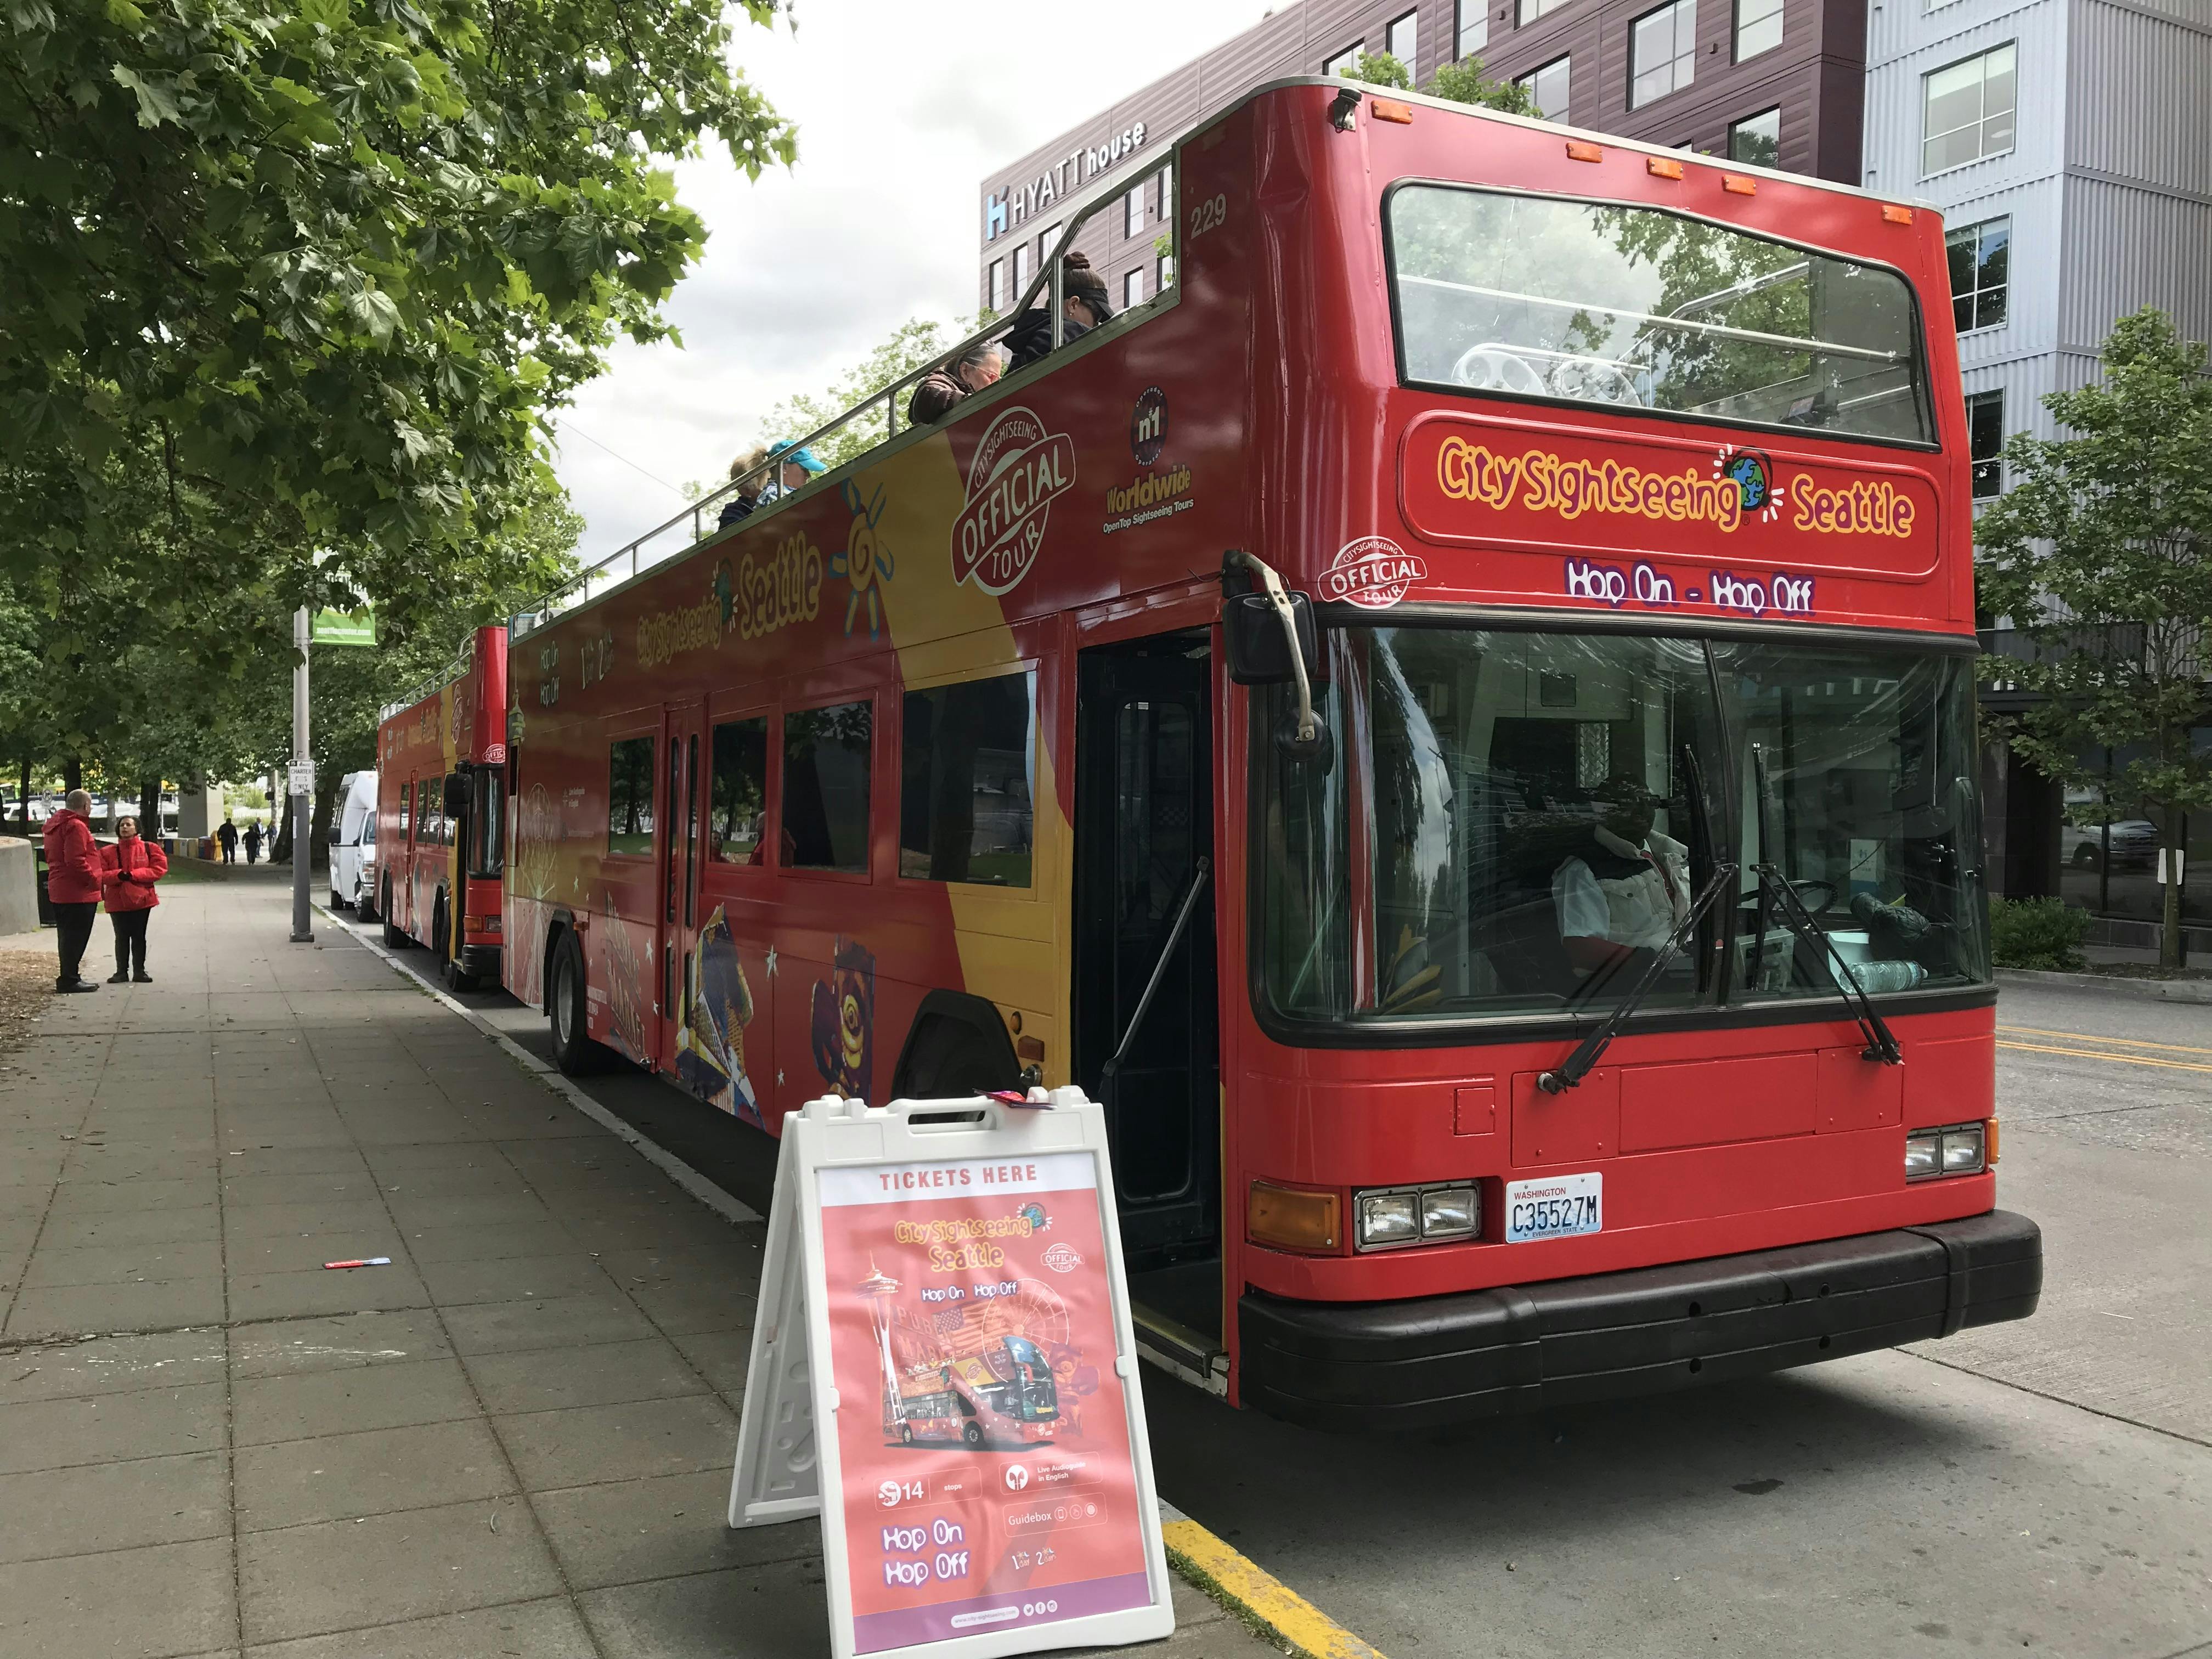 City Sightseeing wycieczka autobusowa typu hop-on hop-off po Seattle